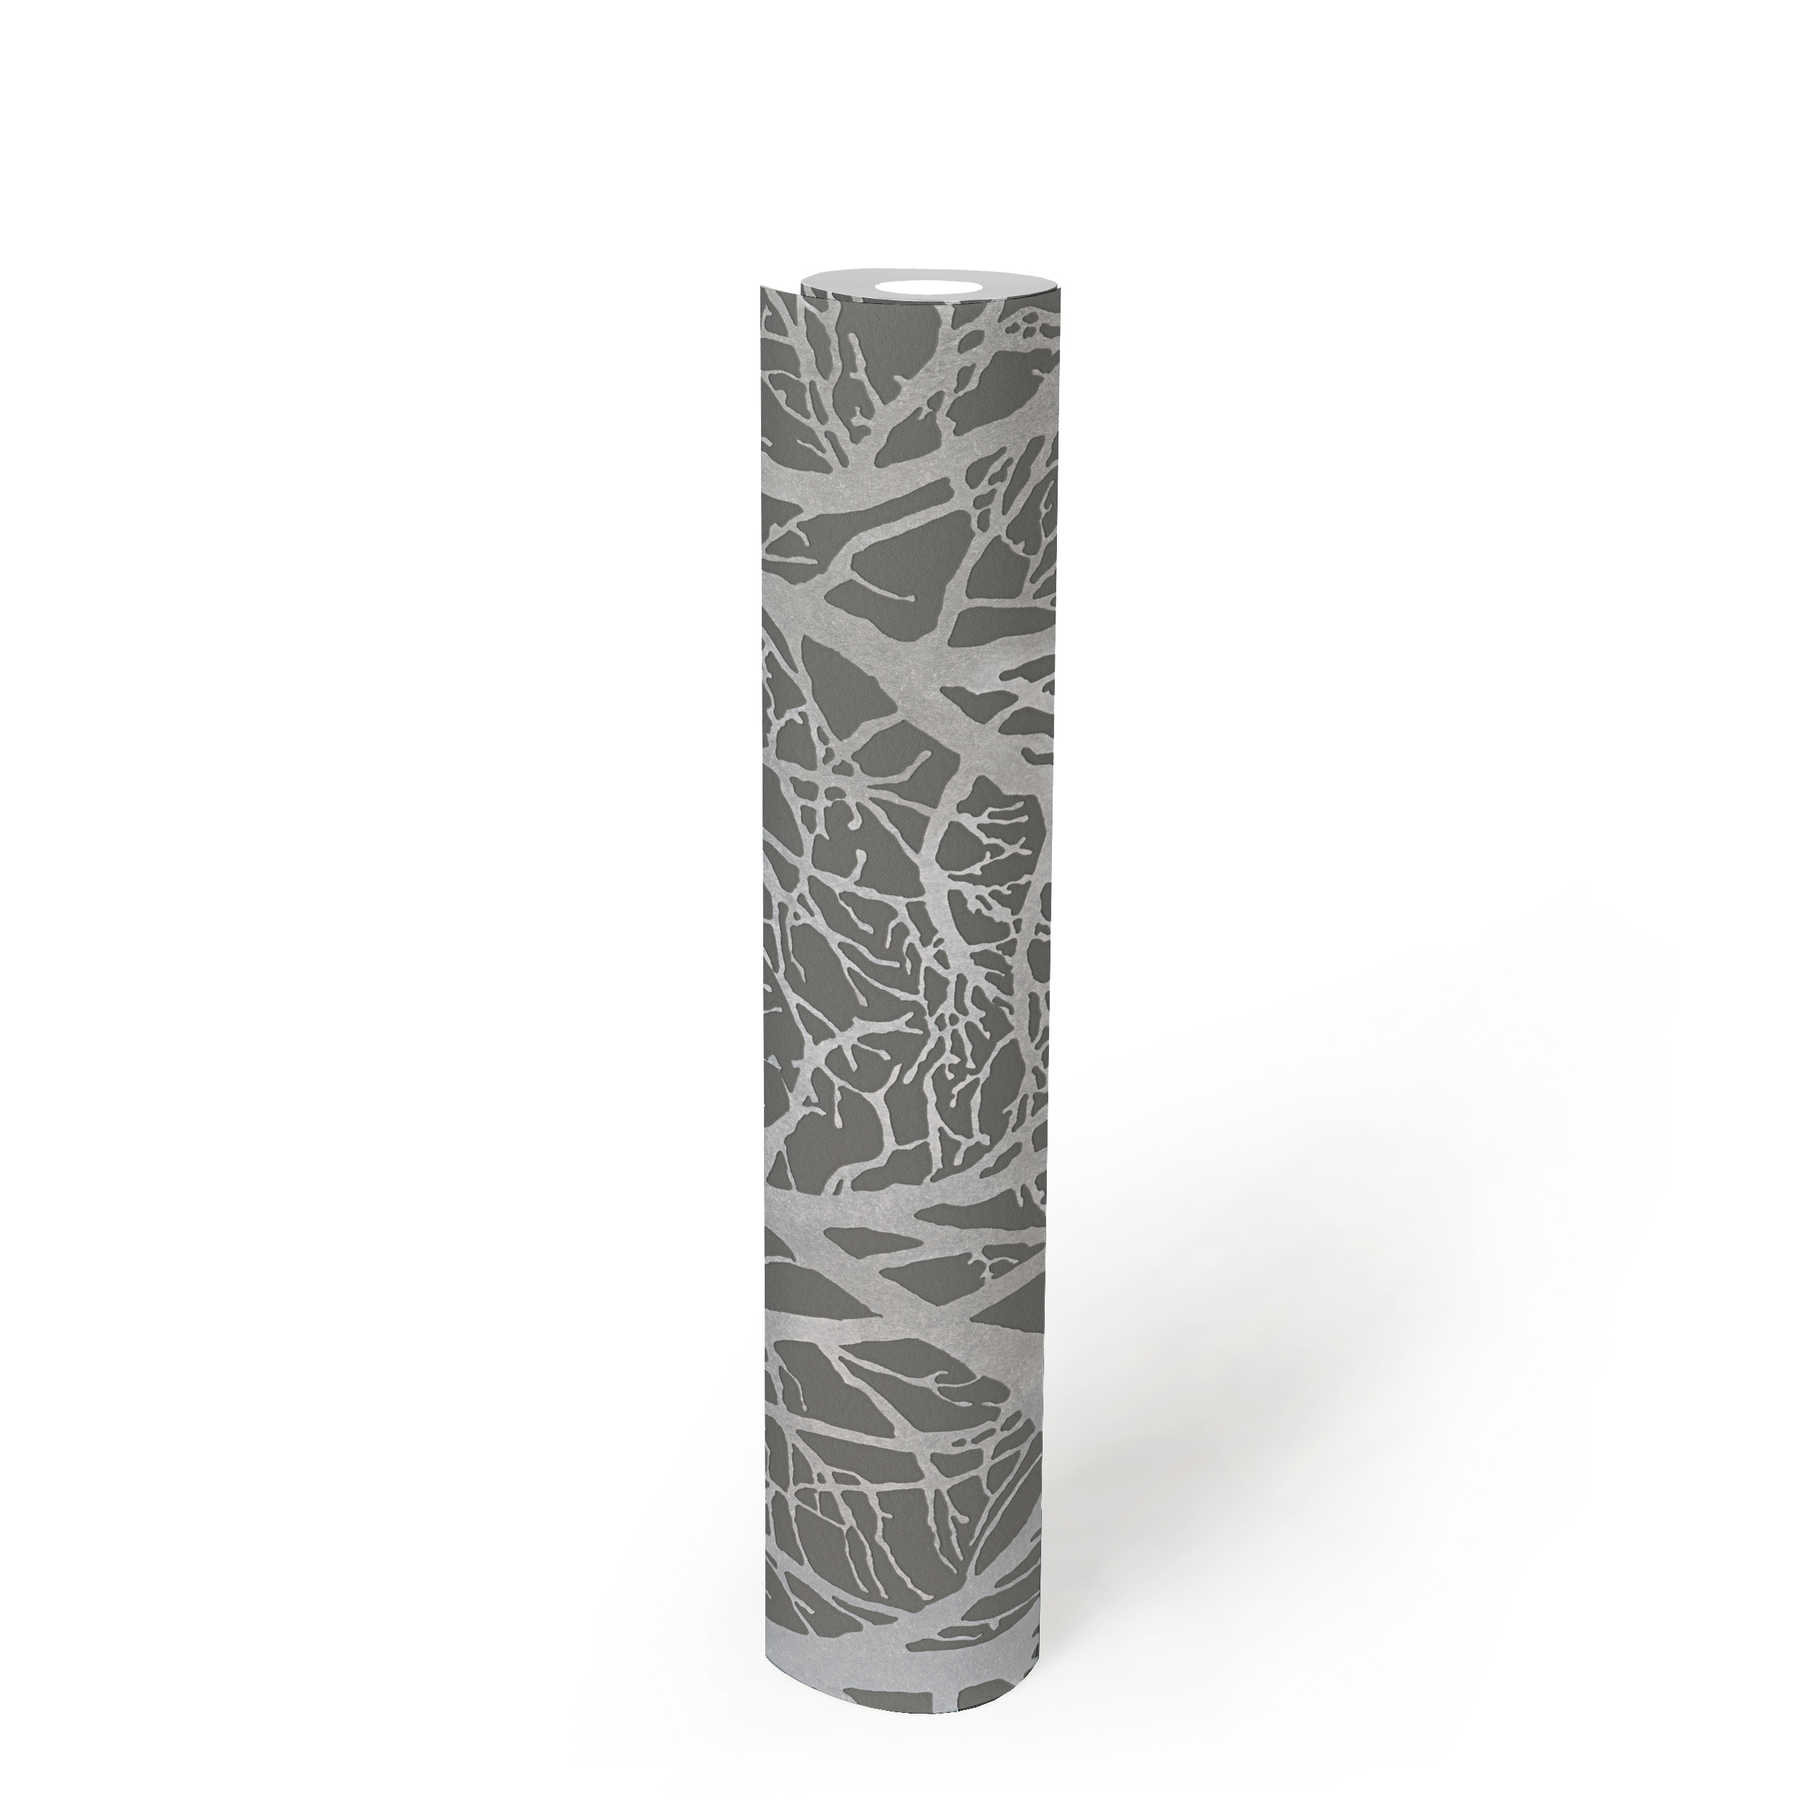             Anthrazit Tapete mit Ast-Motiv & Metallic-Effekt – Silber, Grau
        